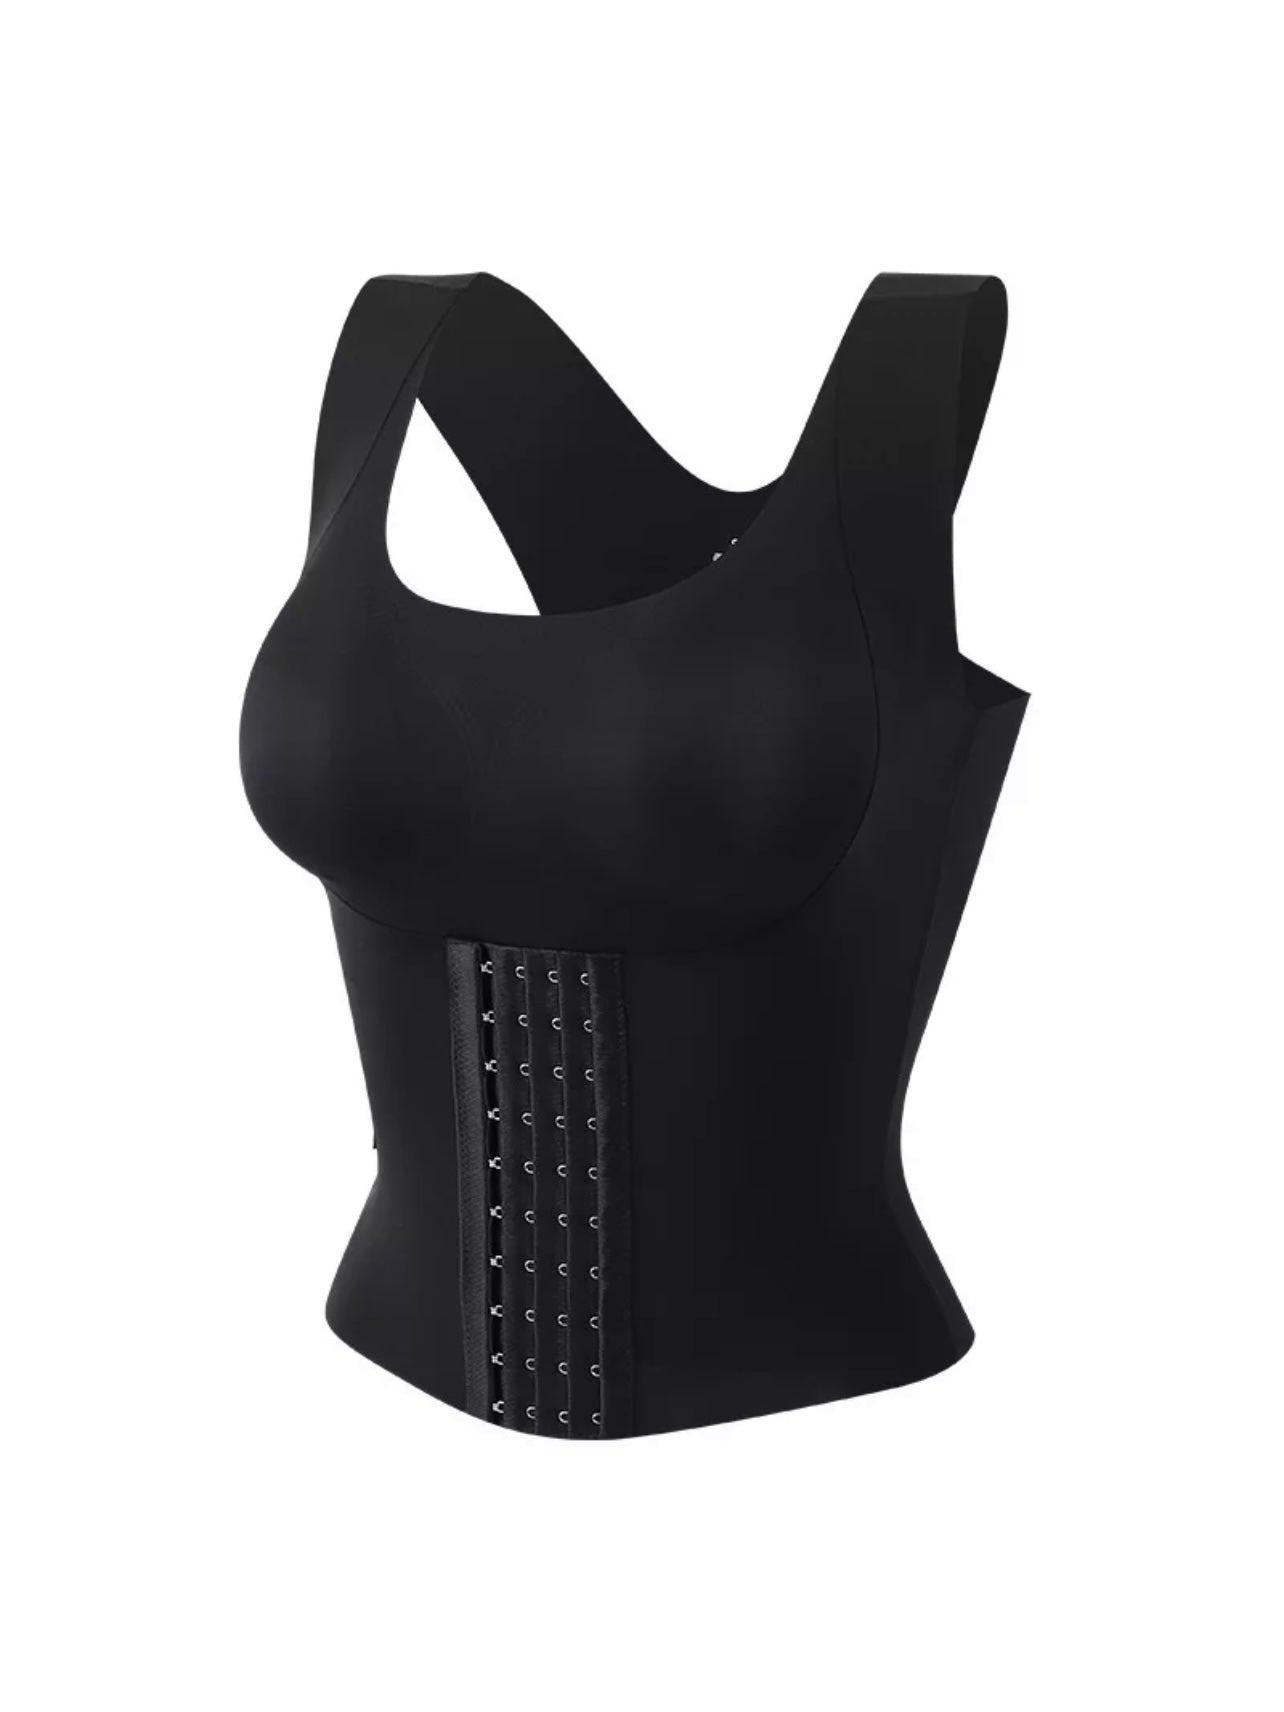 S845 男性女性化乳房シェイパー痩身胸コルセット 圧縮ボディビルノースリーブ正しい姿勢 トップス コンビニ受取対応商品